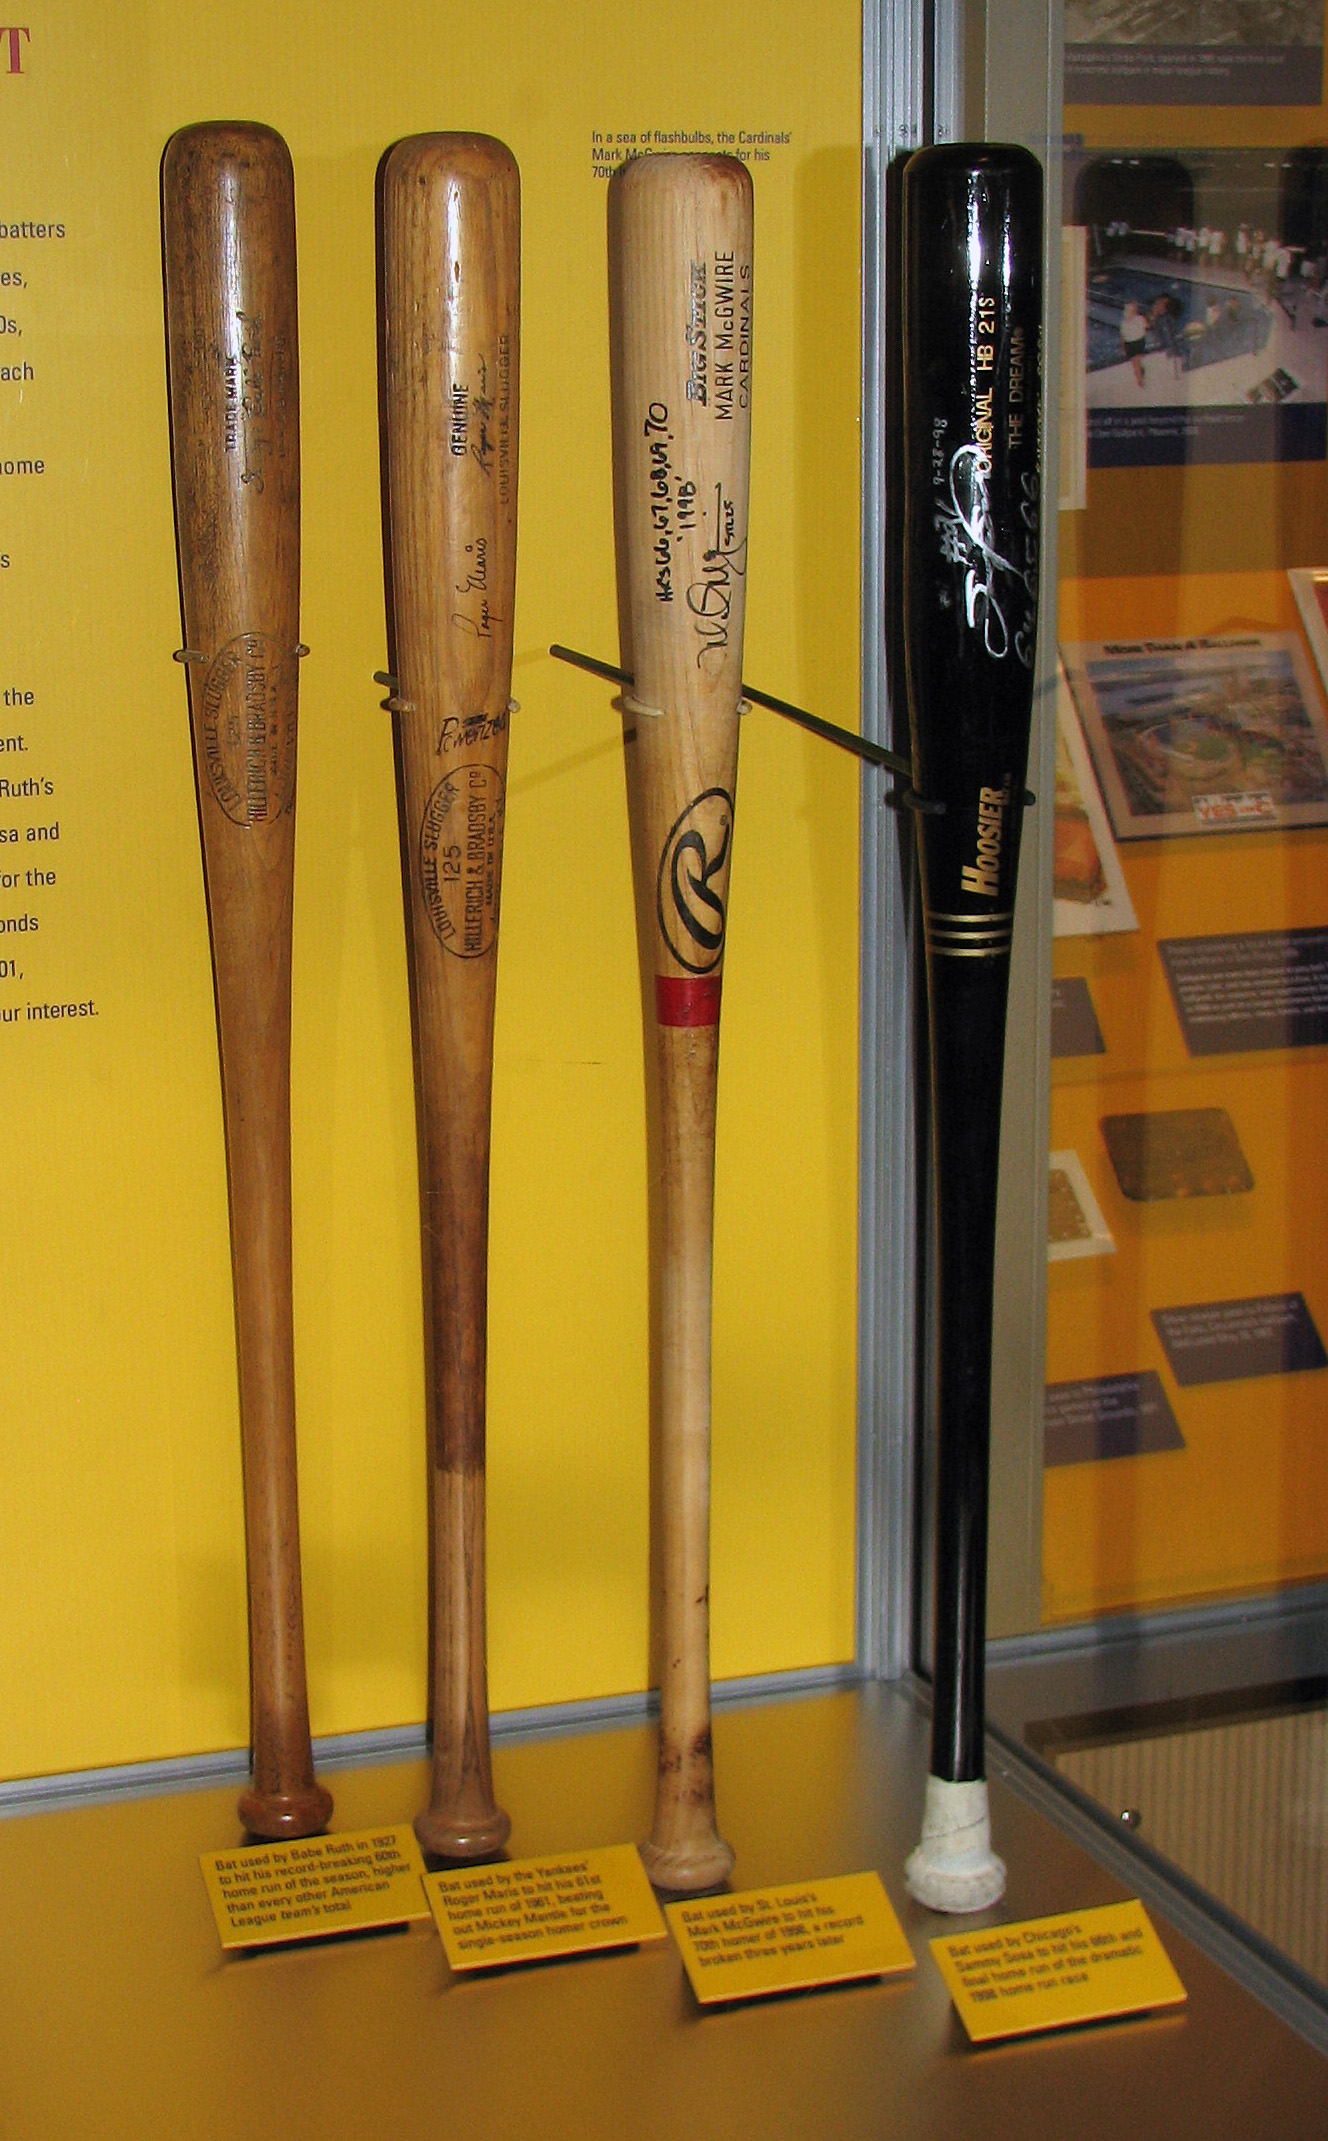 Four Wooden baseball bats with pine tar